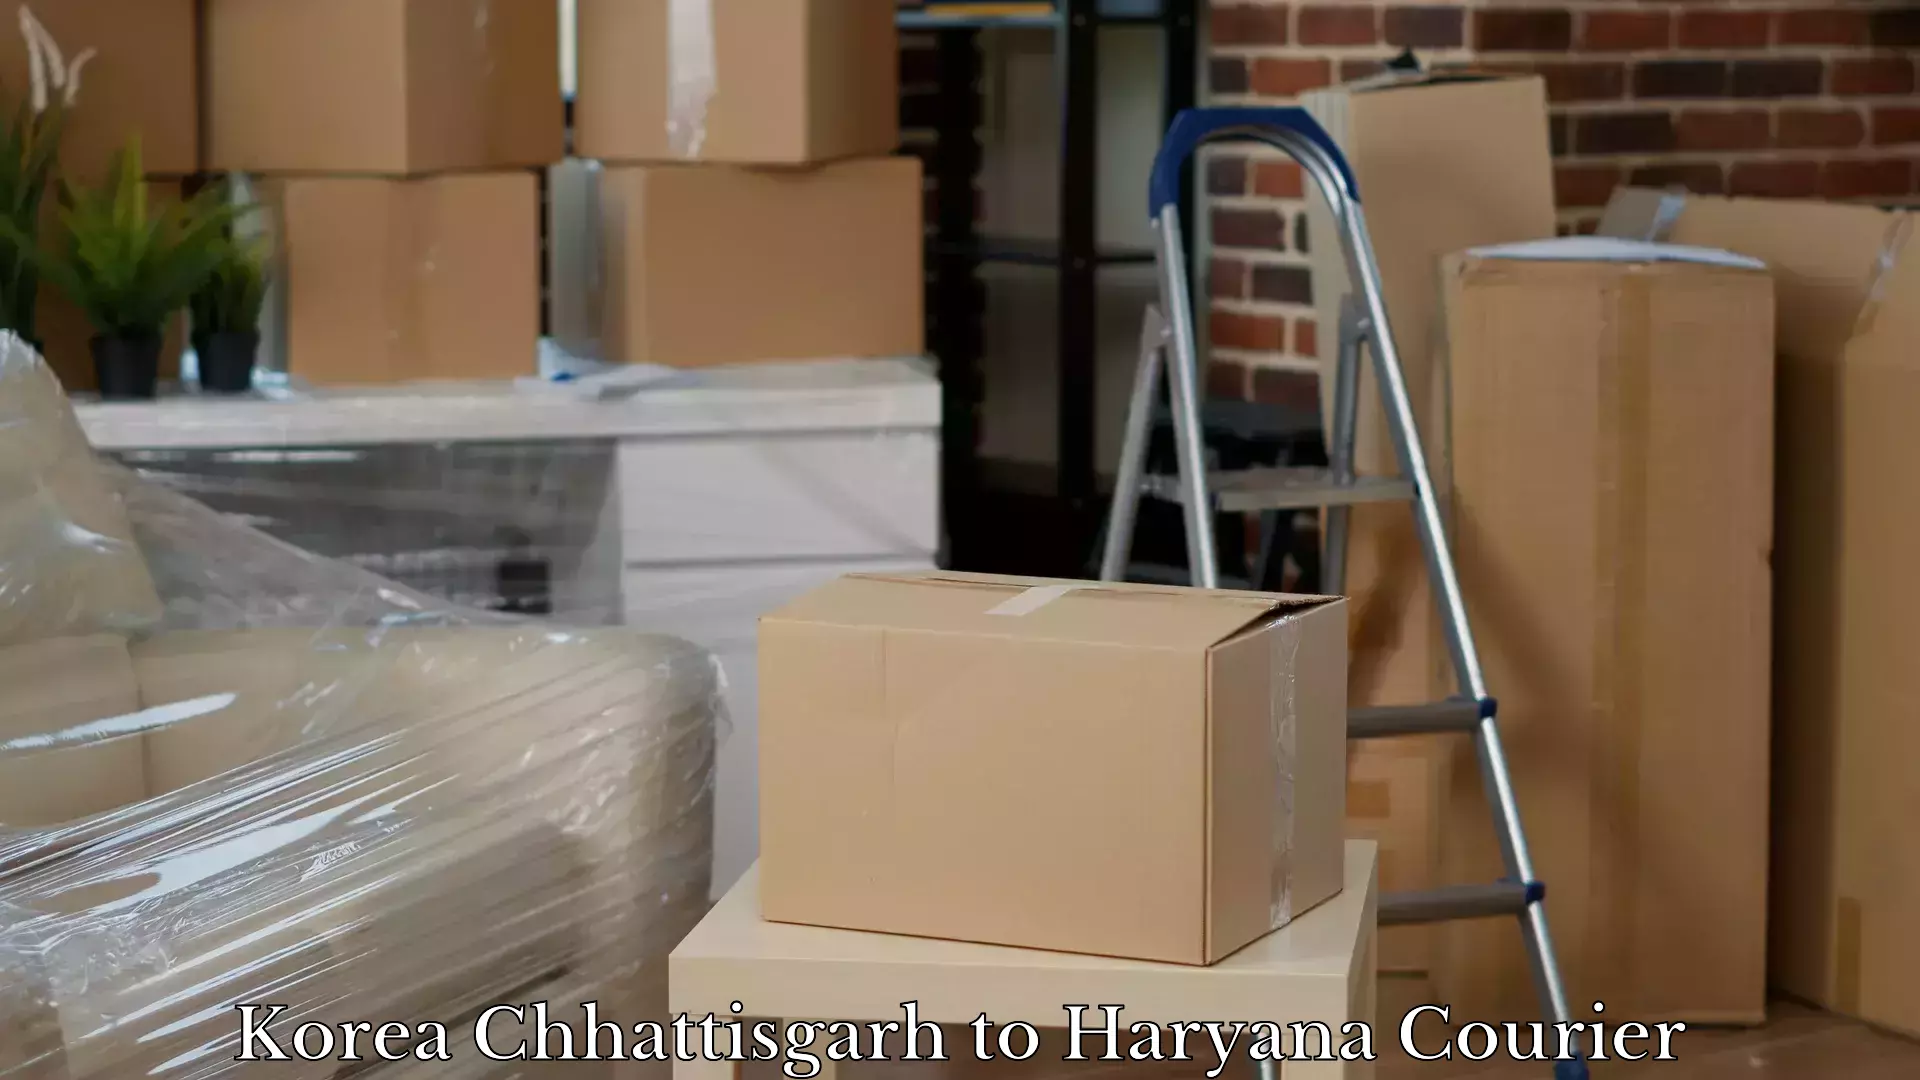 Baggage shipping experience Korea Chhattisgarh to Sirsa